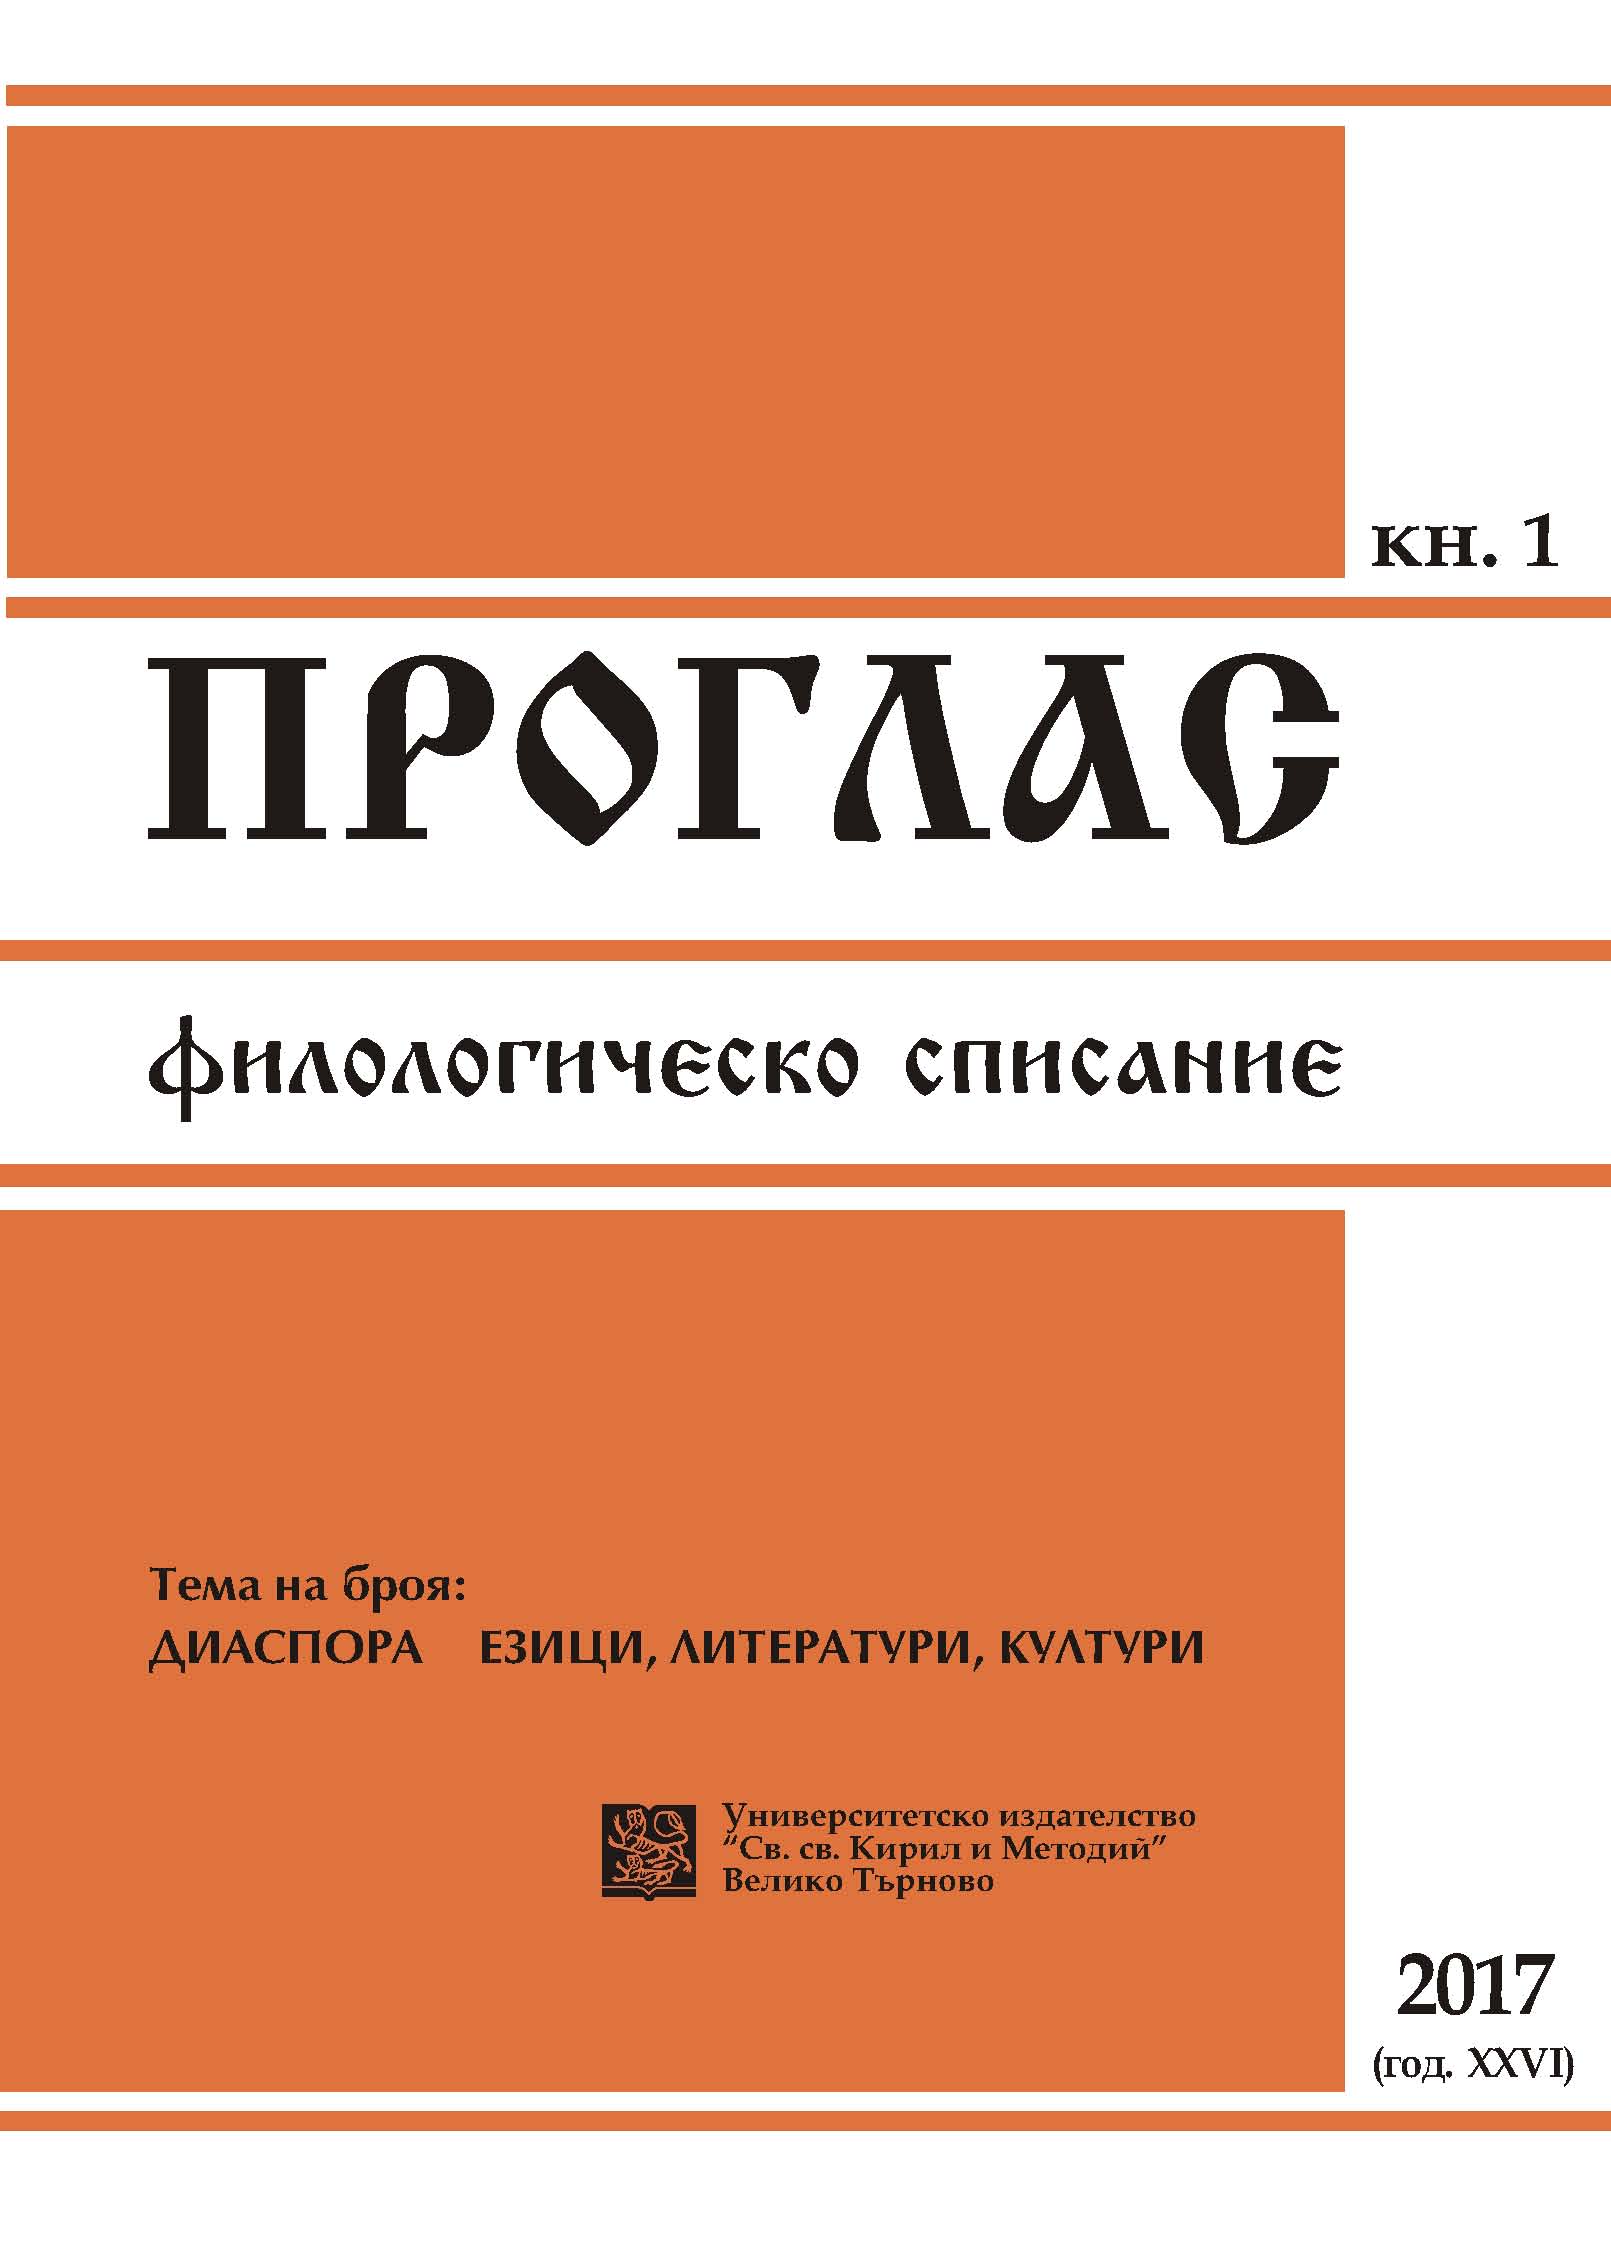 The National Calendar of Bessarabian Bulgarians: A Linguistic-Cultural Interpretation Cover Image